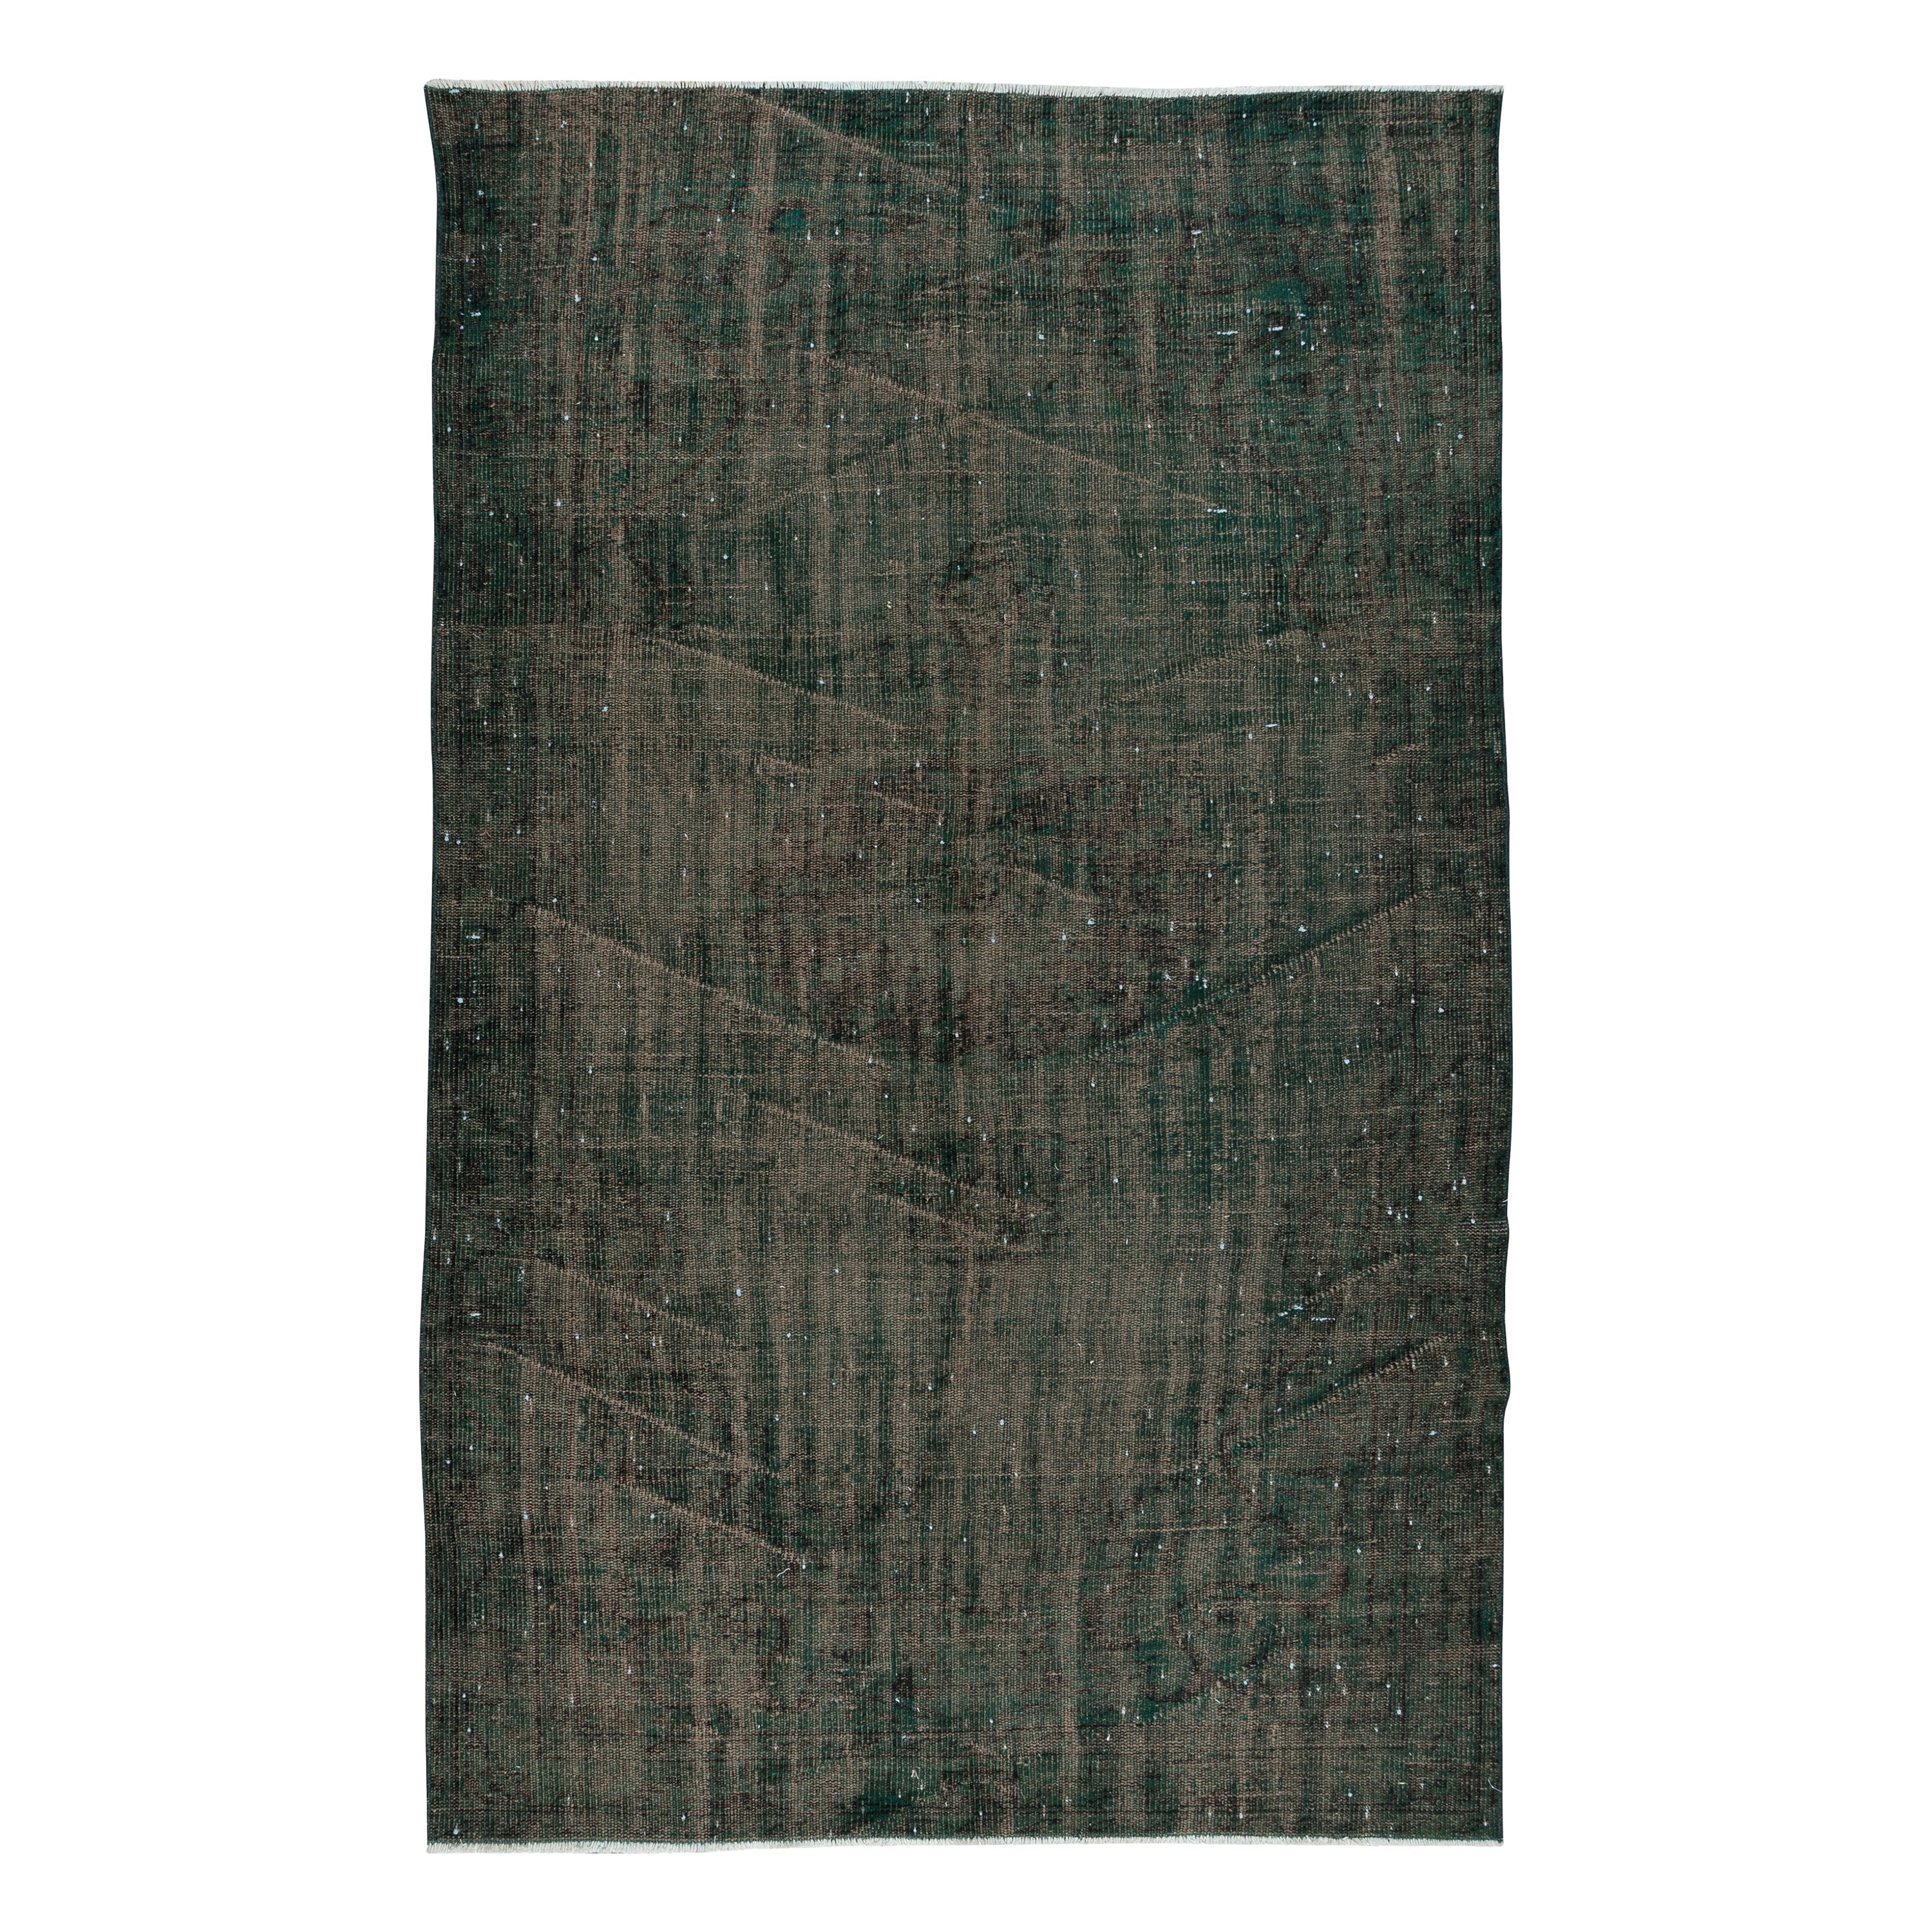 5.3x8.5 Ft Distressed Dark Green Rug, Handmade Turkish Shabby Chic Carpet